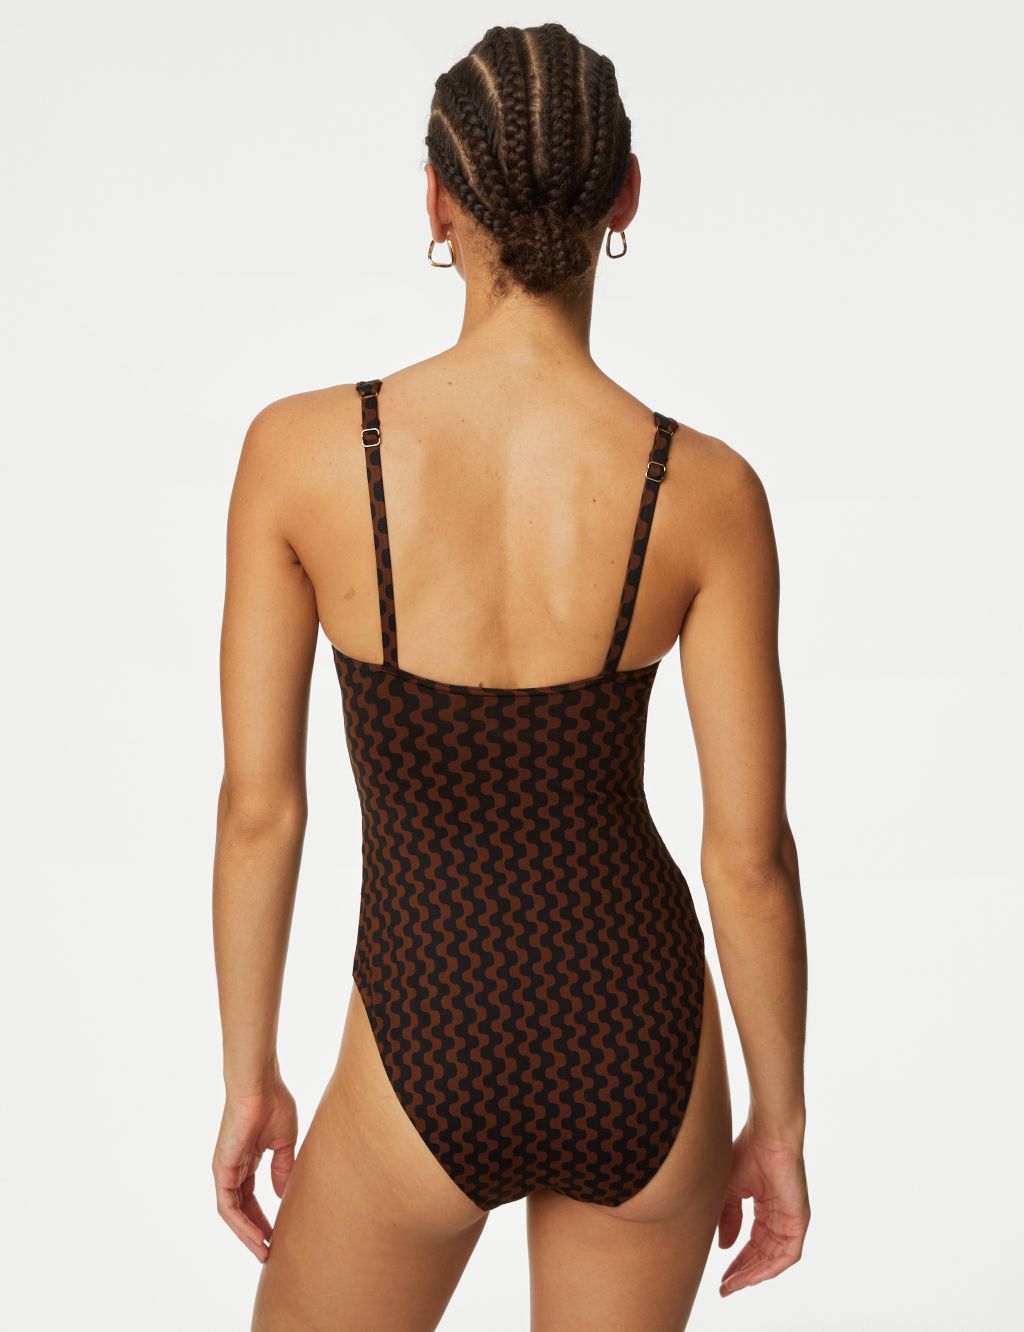 M&S fans 'need' £29 'tummy control' sculpt swimsuit that 'hides lumps and  bumps' - Mirror Online